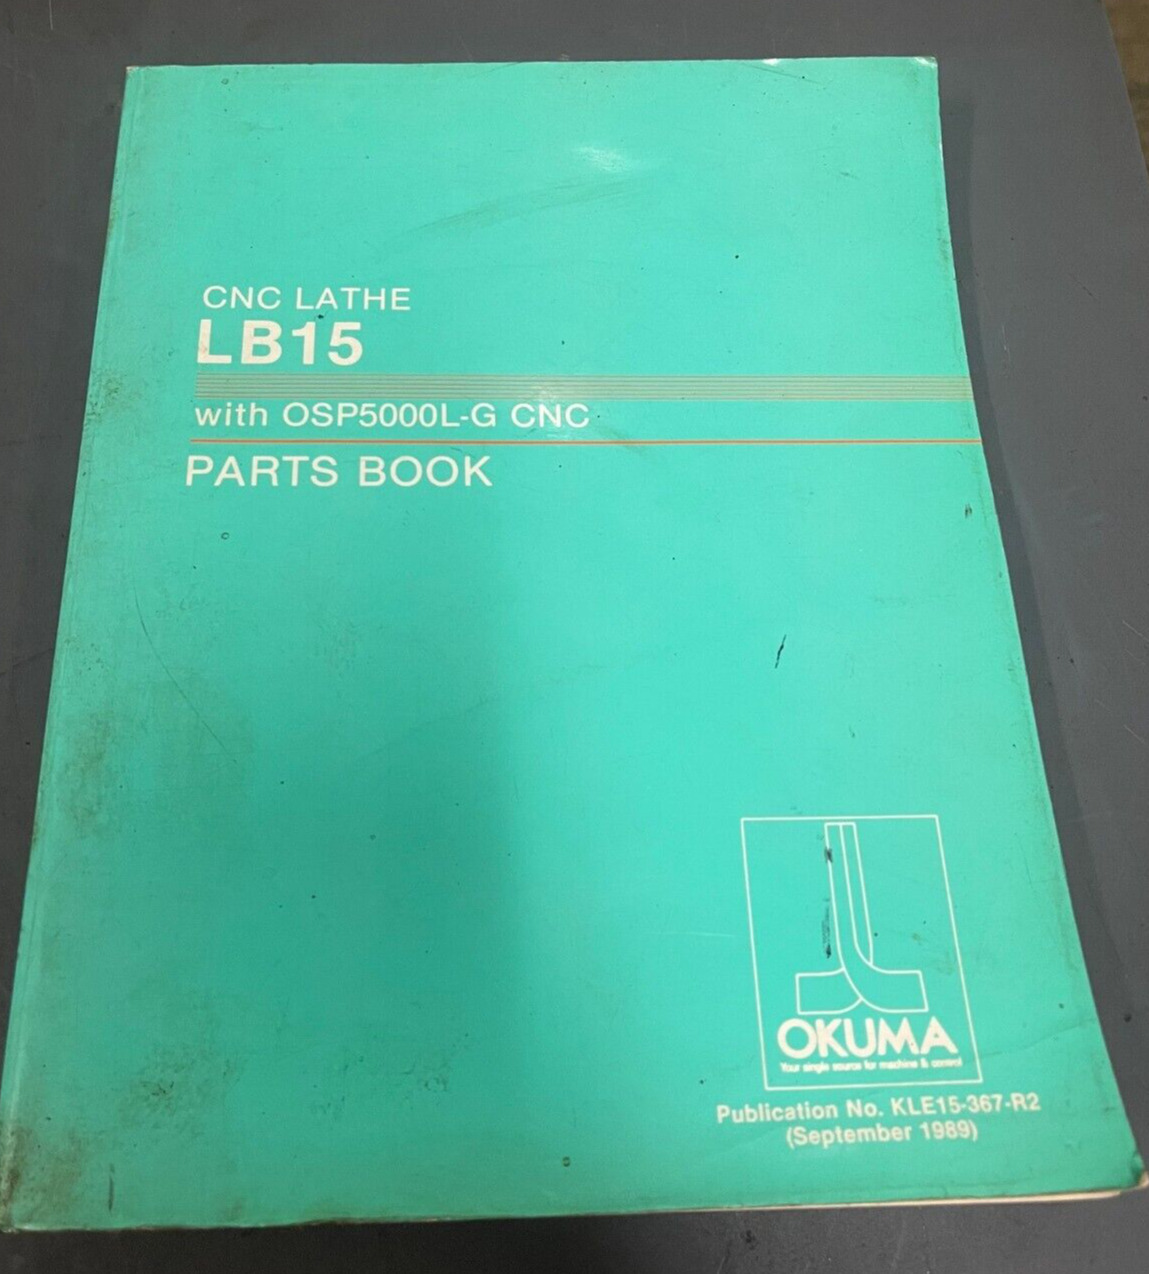 OKUMA CNC LATHE LB15 WITH OSP5000L-G CNC PARTS BOOK